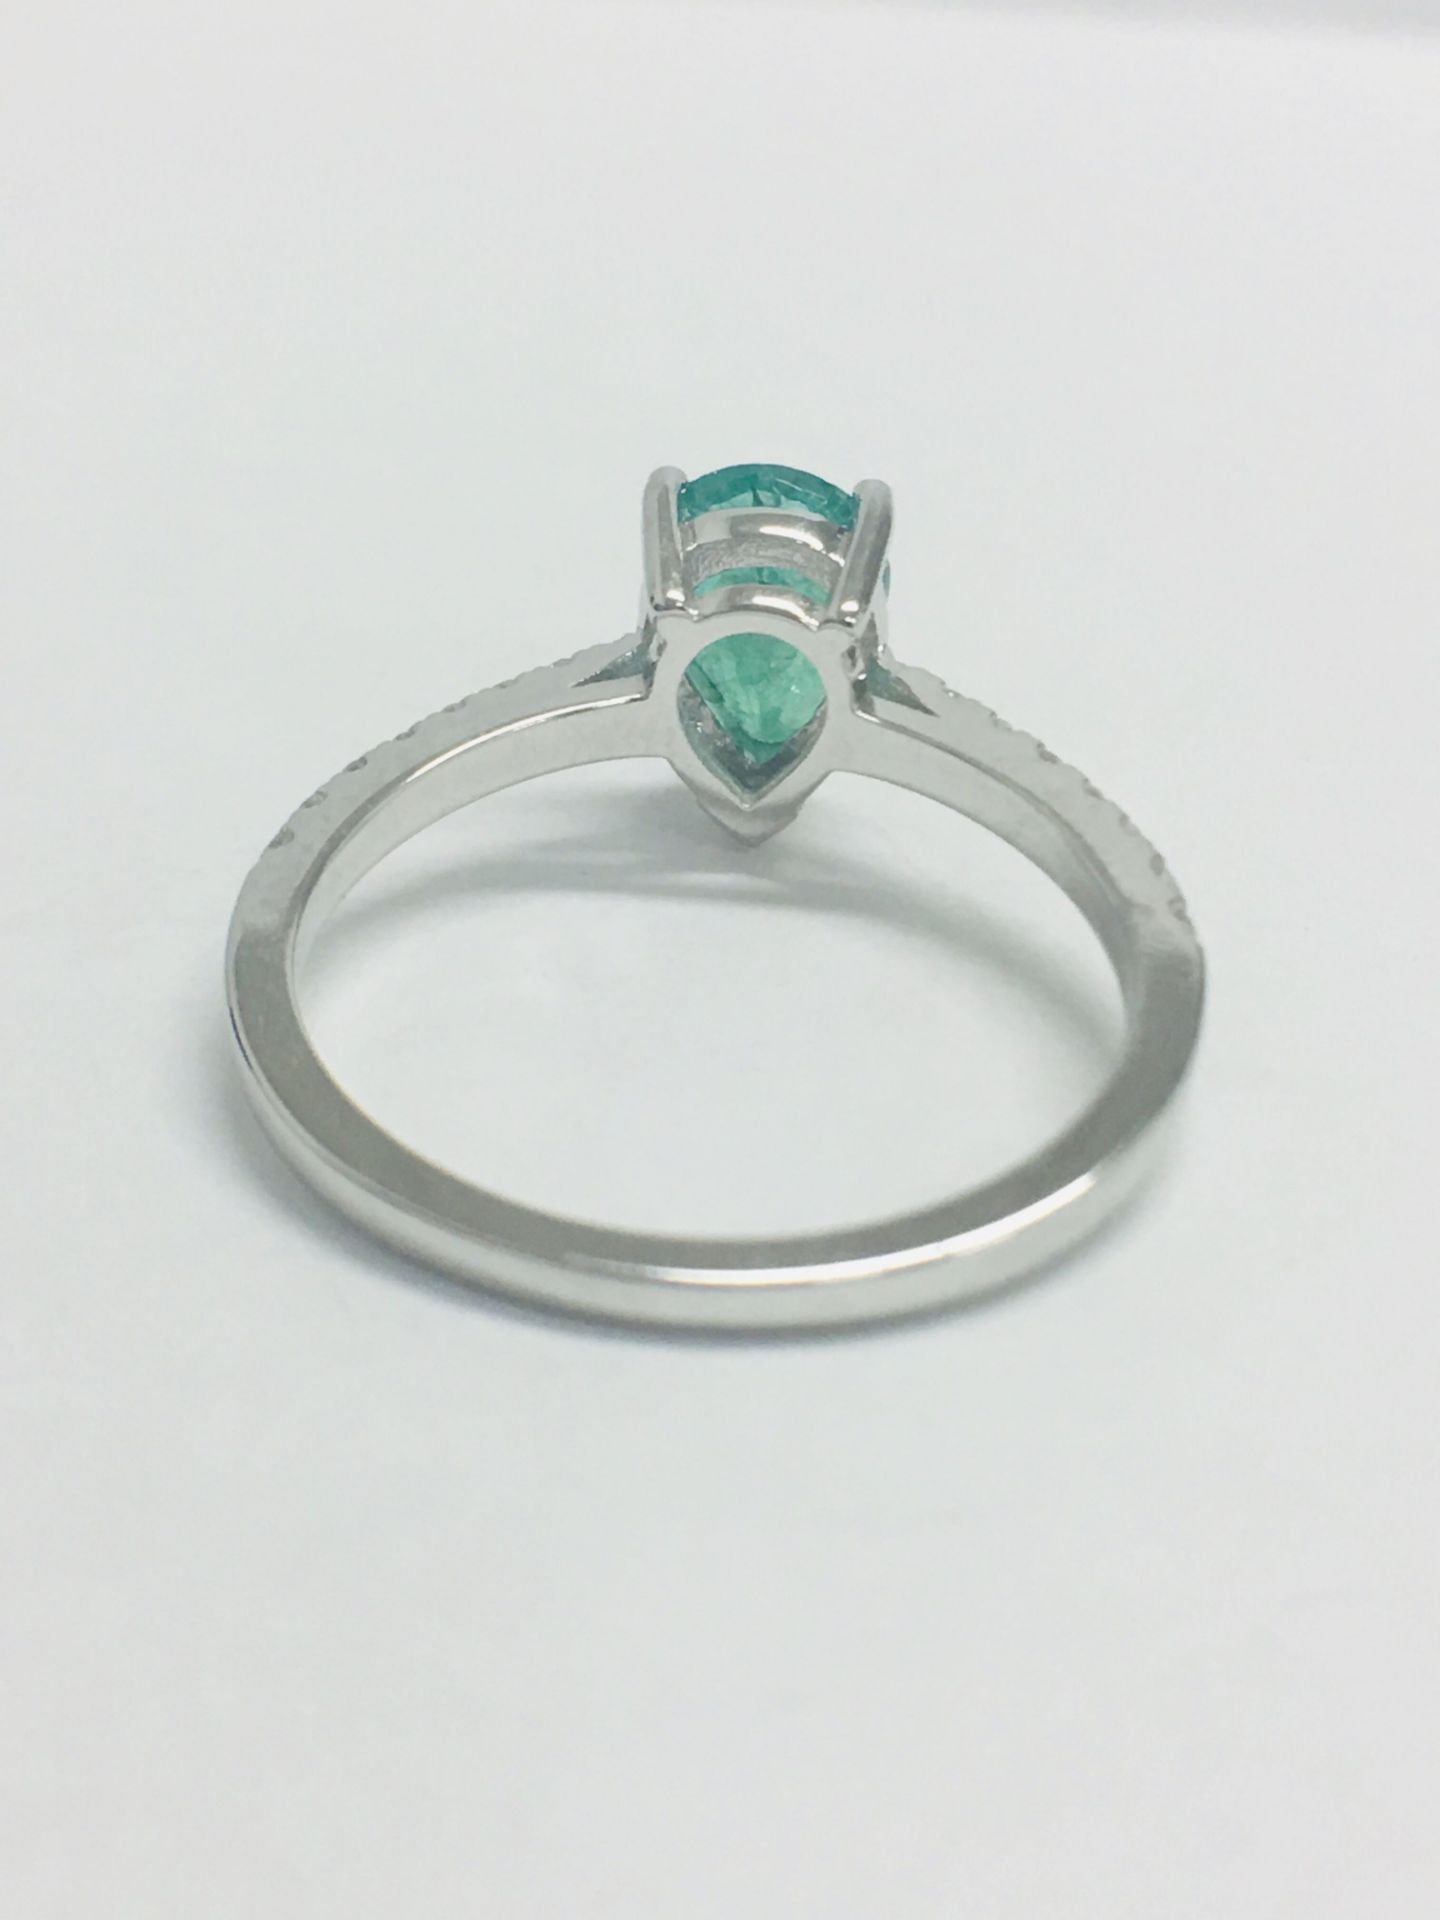 14ct White Gold Emerald & Diamond Ring - Image 5 of 10